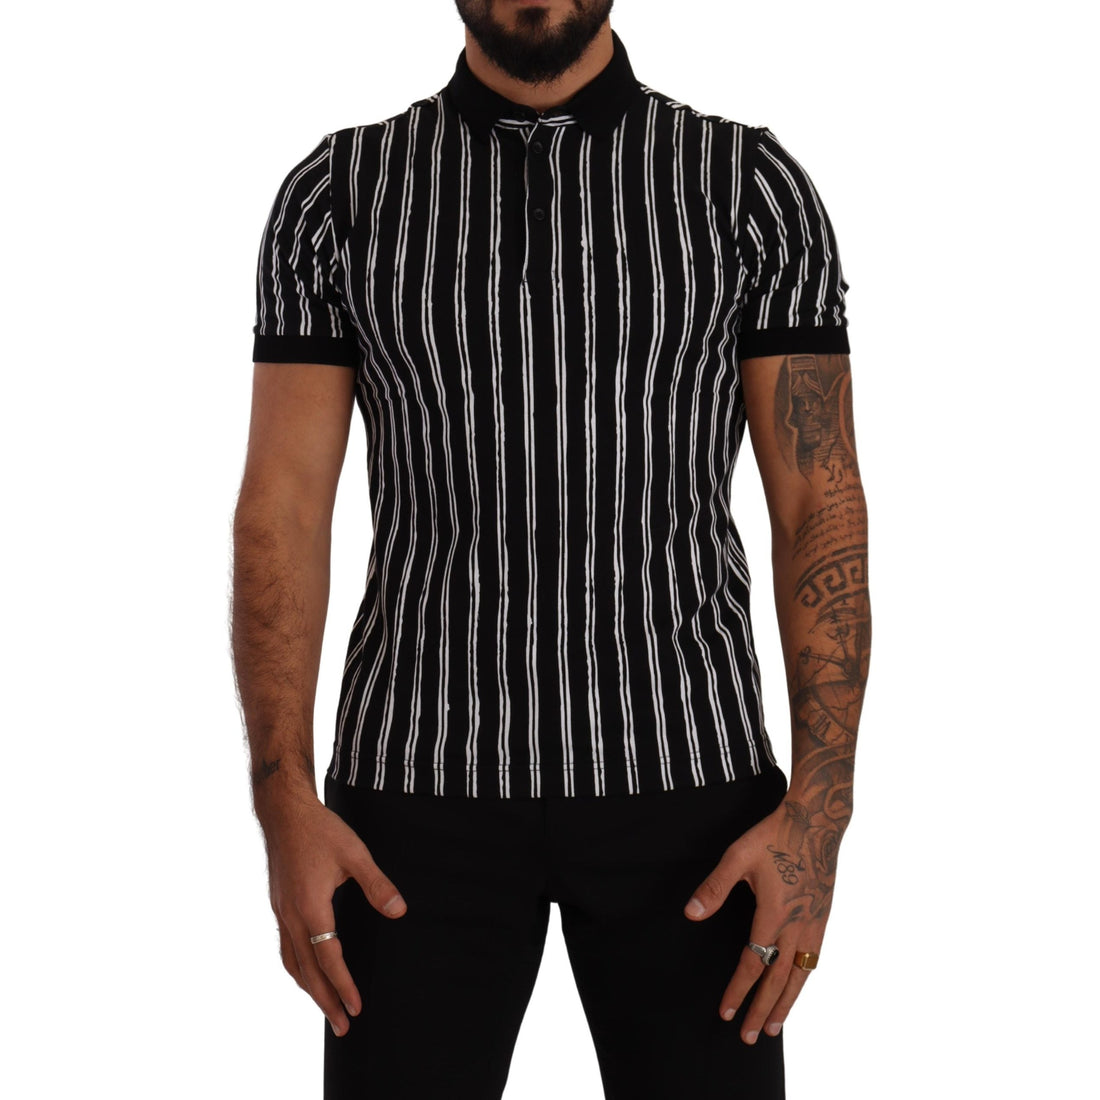 Dolce & Gabbana Black White Striped Polo Short Sleeve  T-shirt